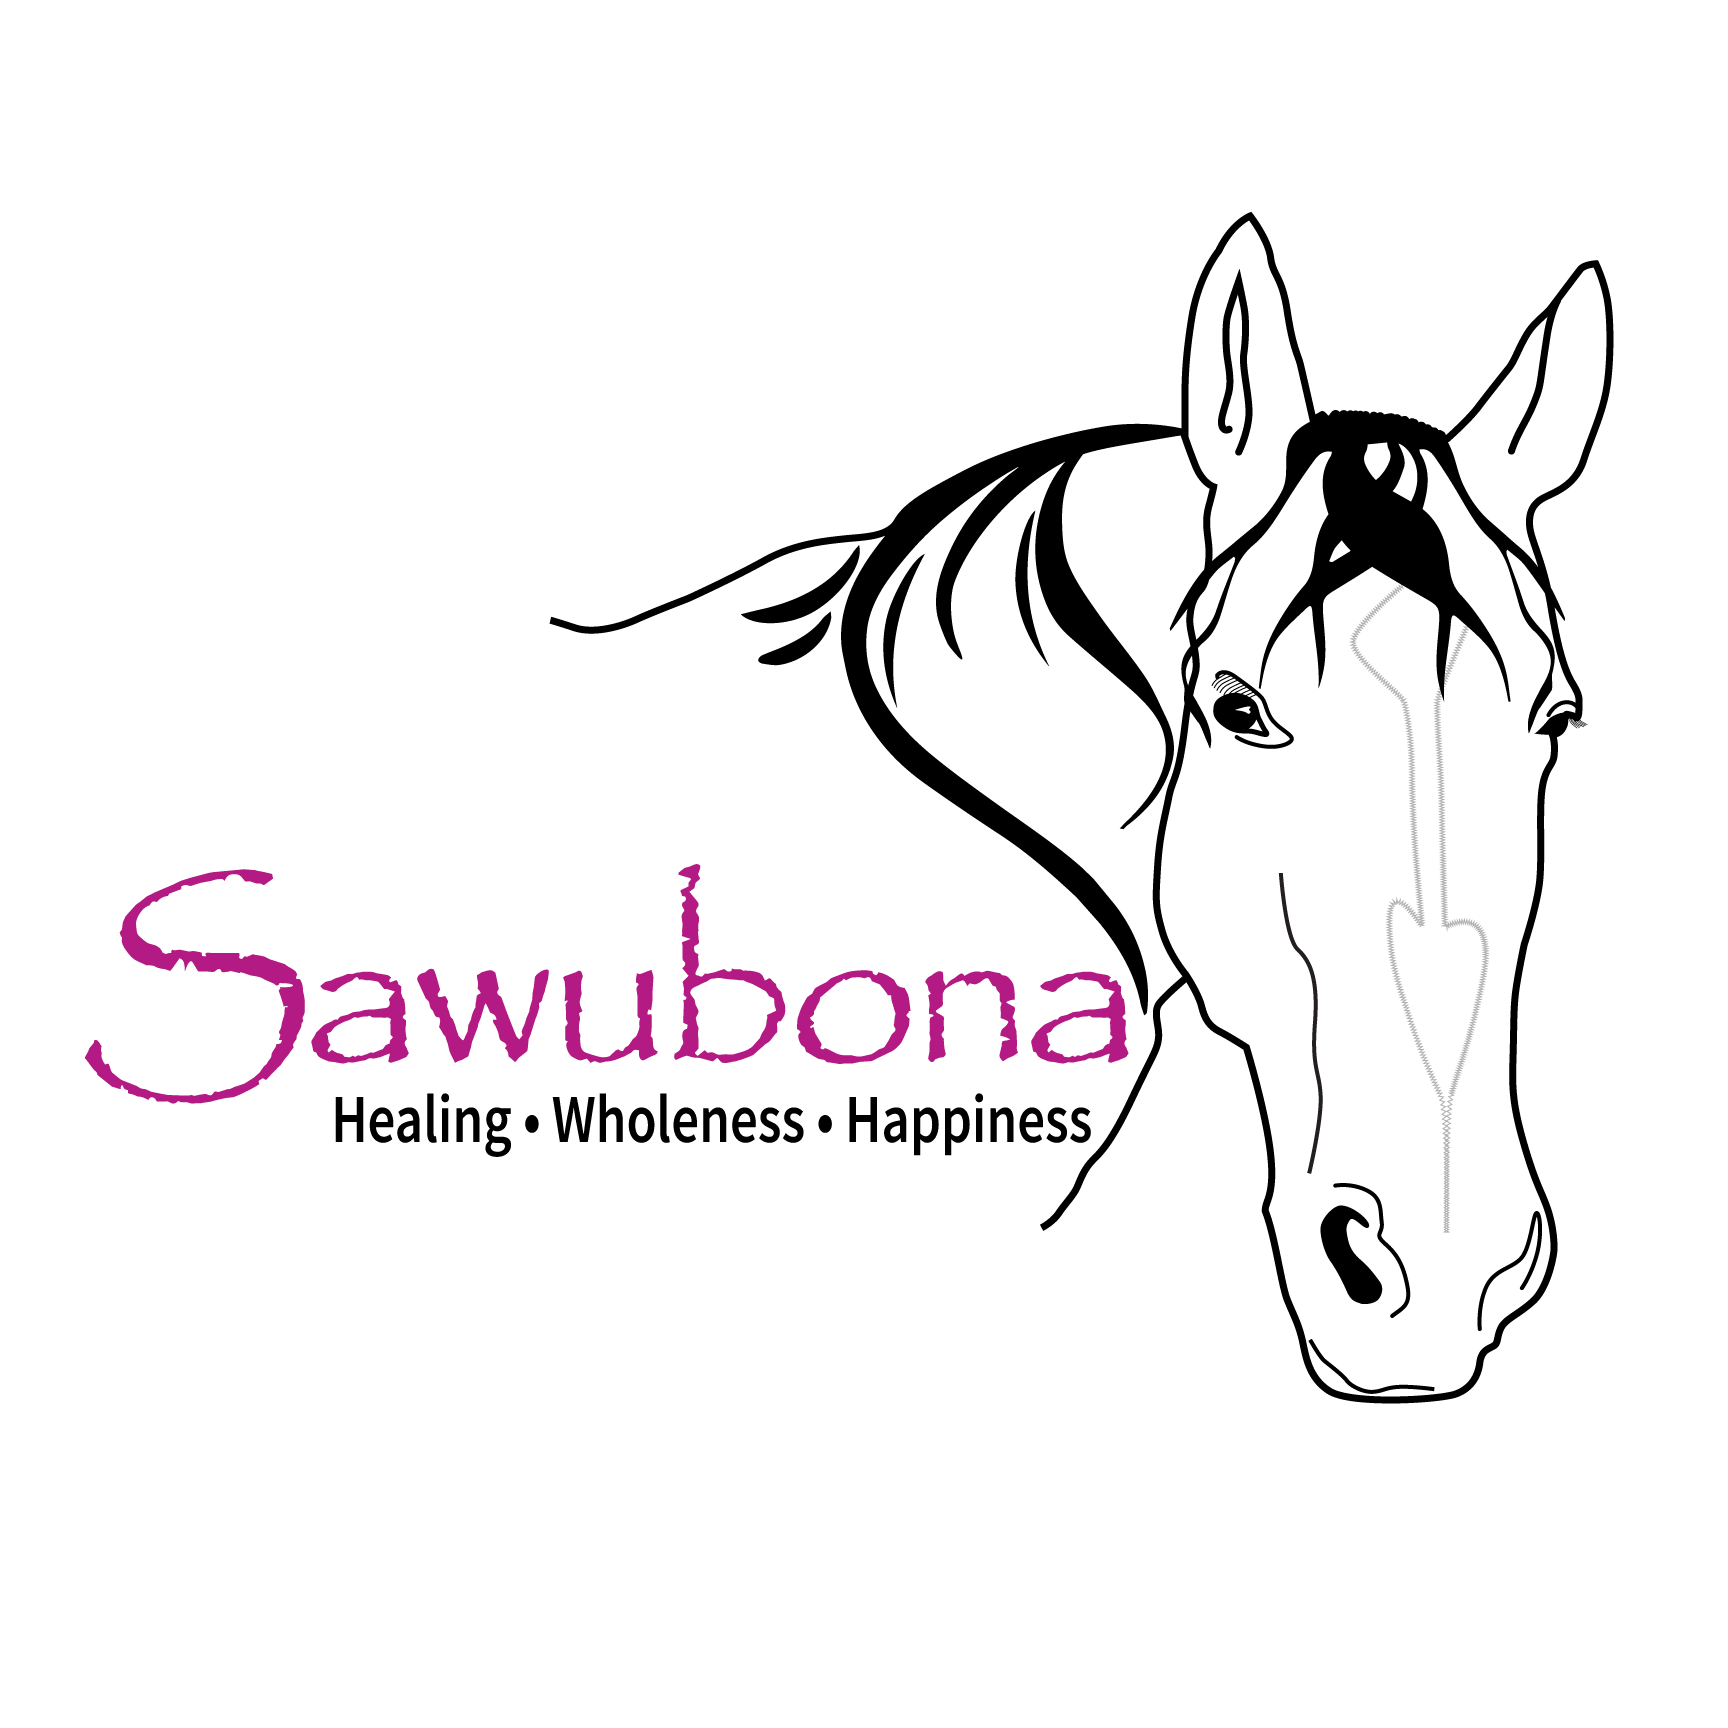 Sawubona Ranch